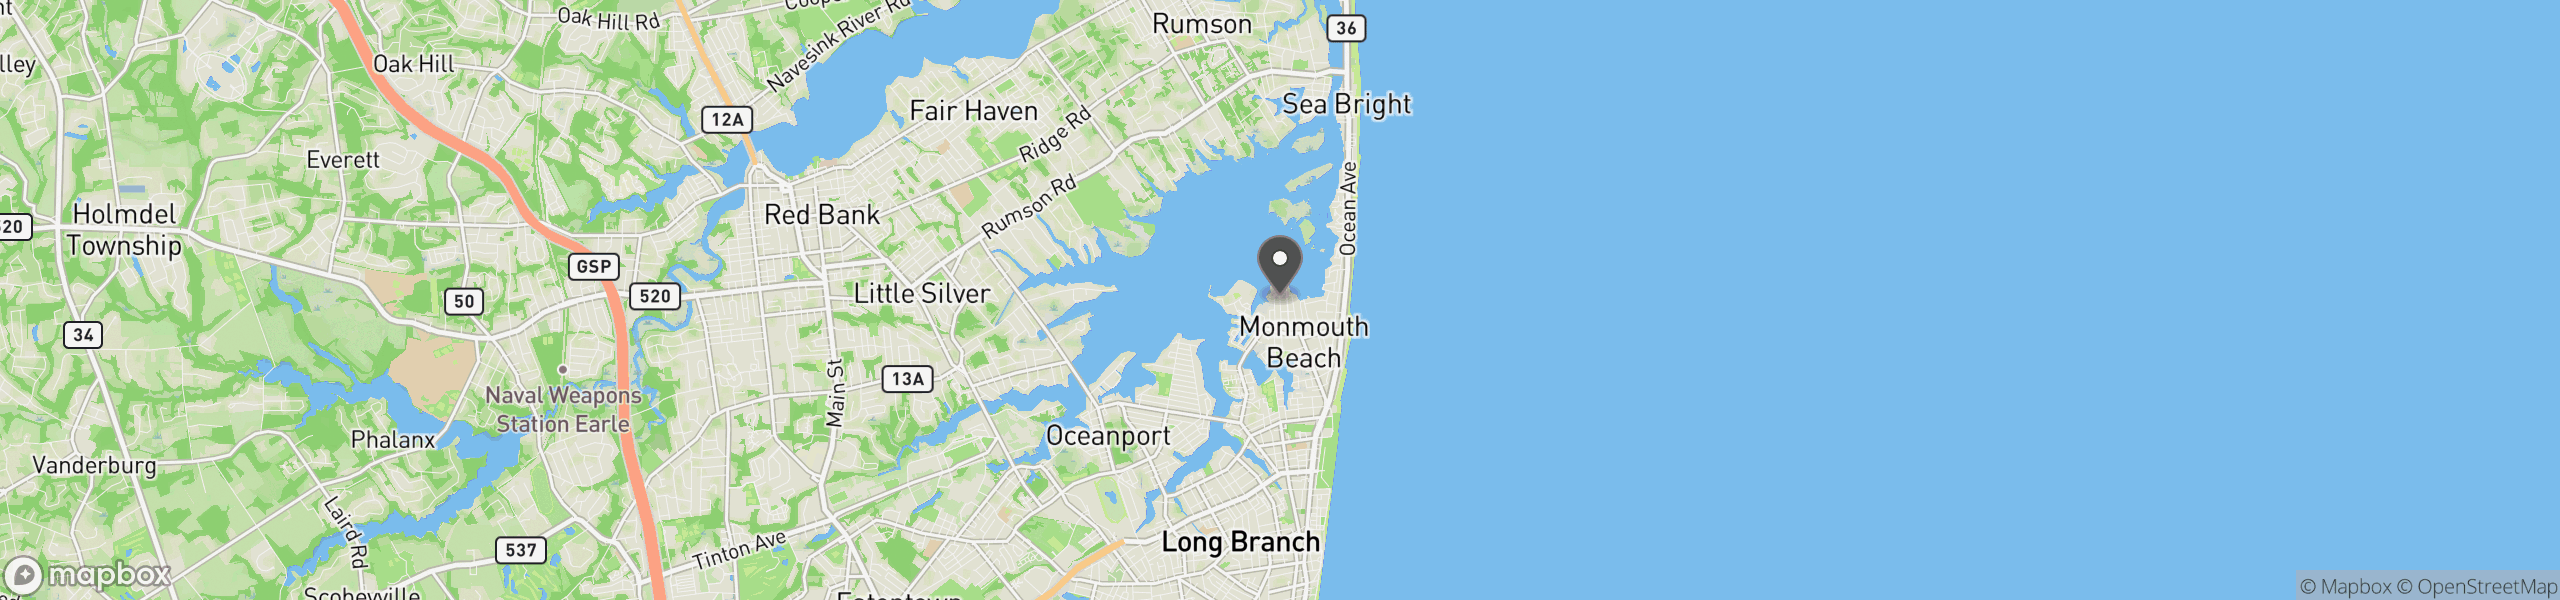 Monmouth Beach, NJ